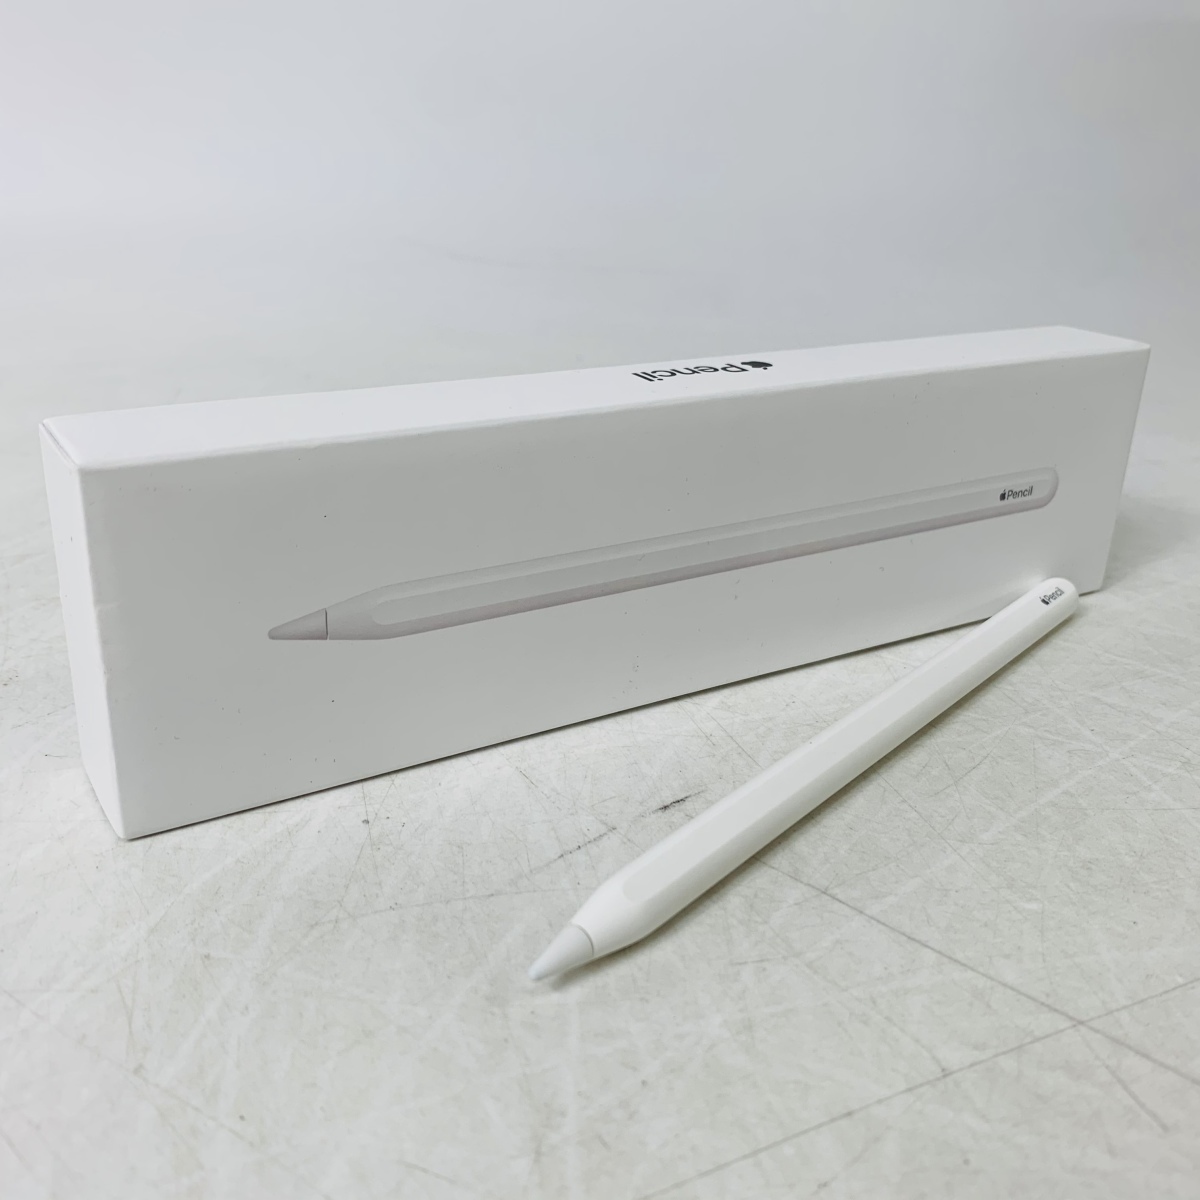 Apple Pencil 第2世代 MU8F2J/A A2051 www.atamed.com.br